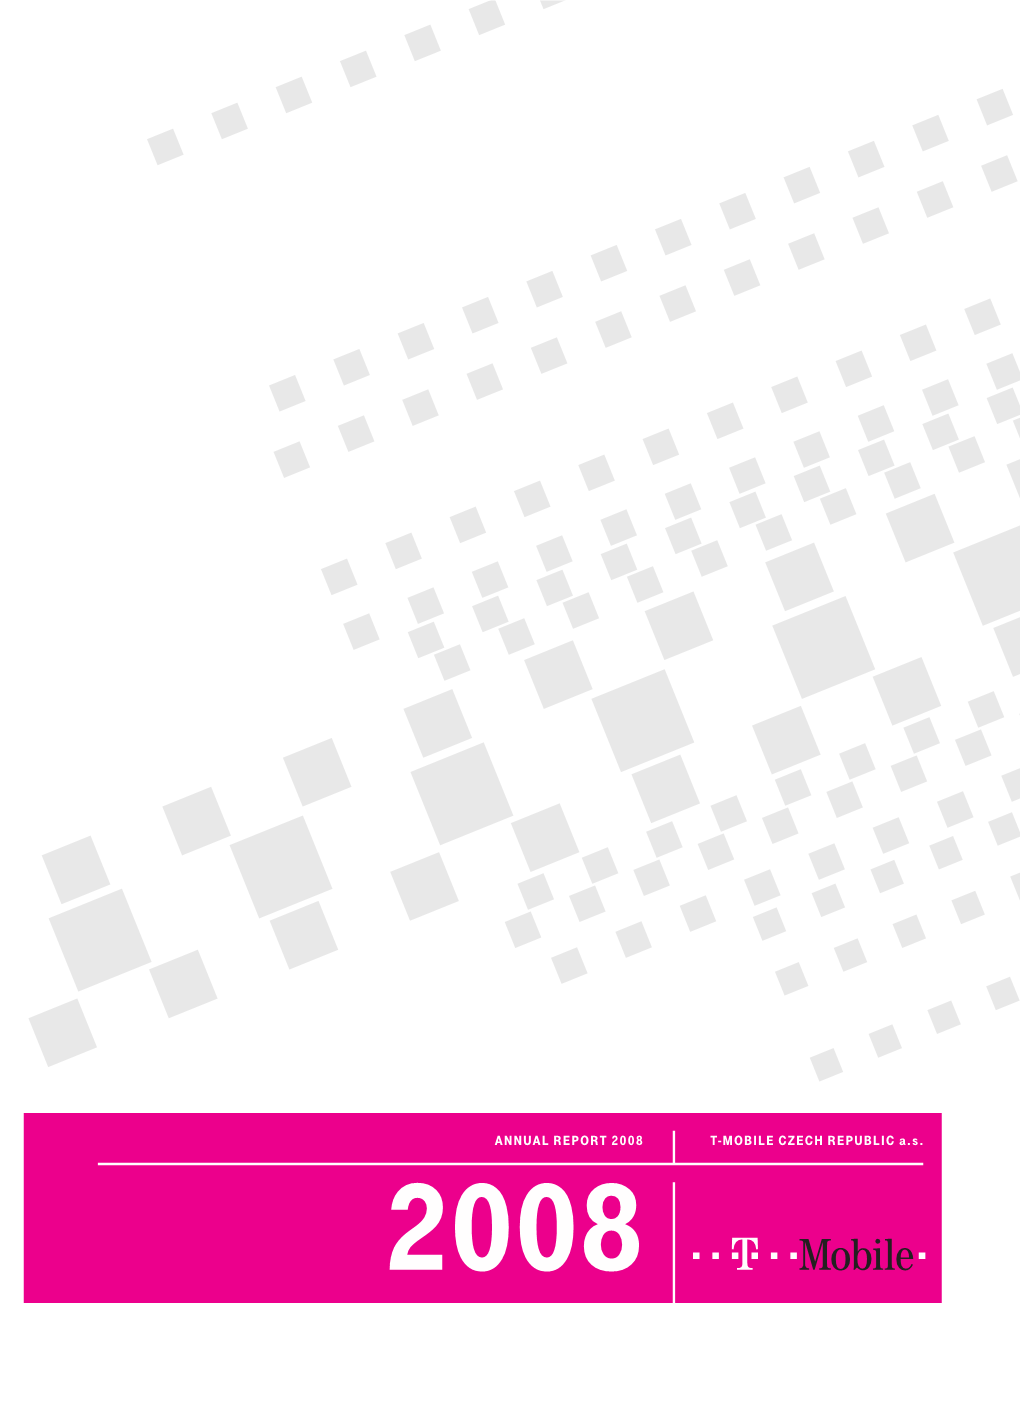 T-MOBILE CZECH REPUBLIC A.S. ANNUAL REPORT 2008